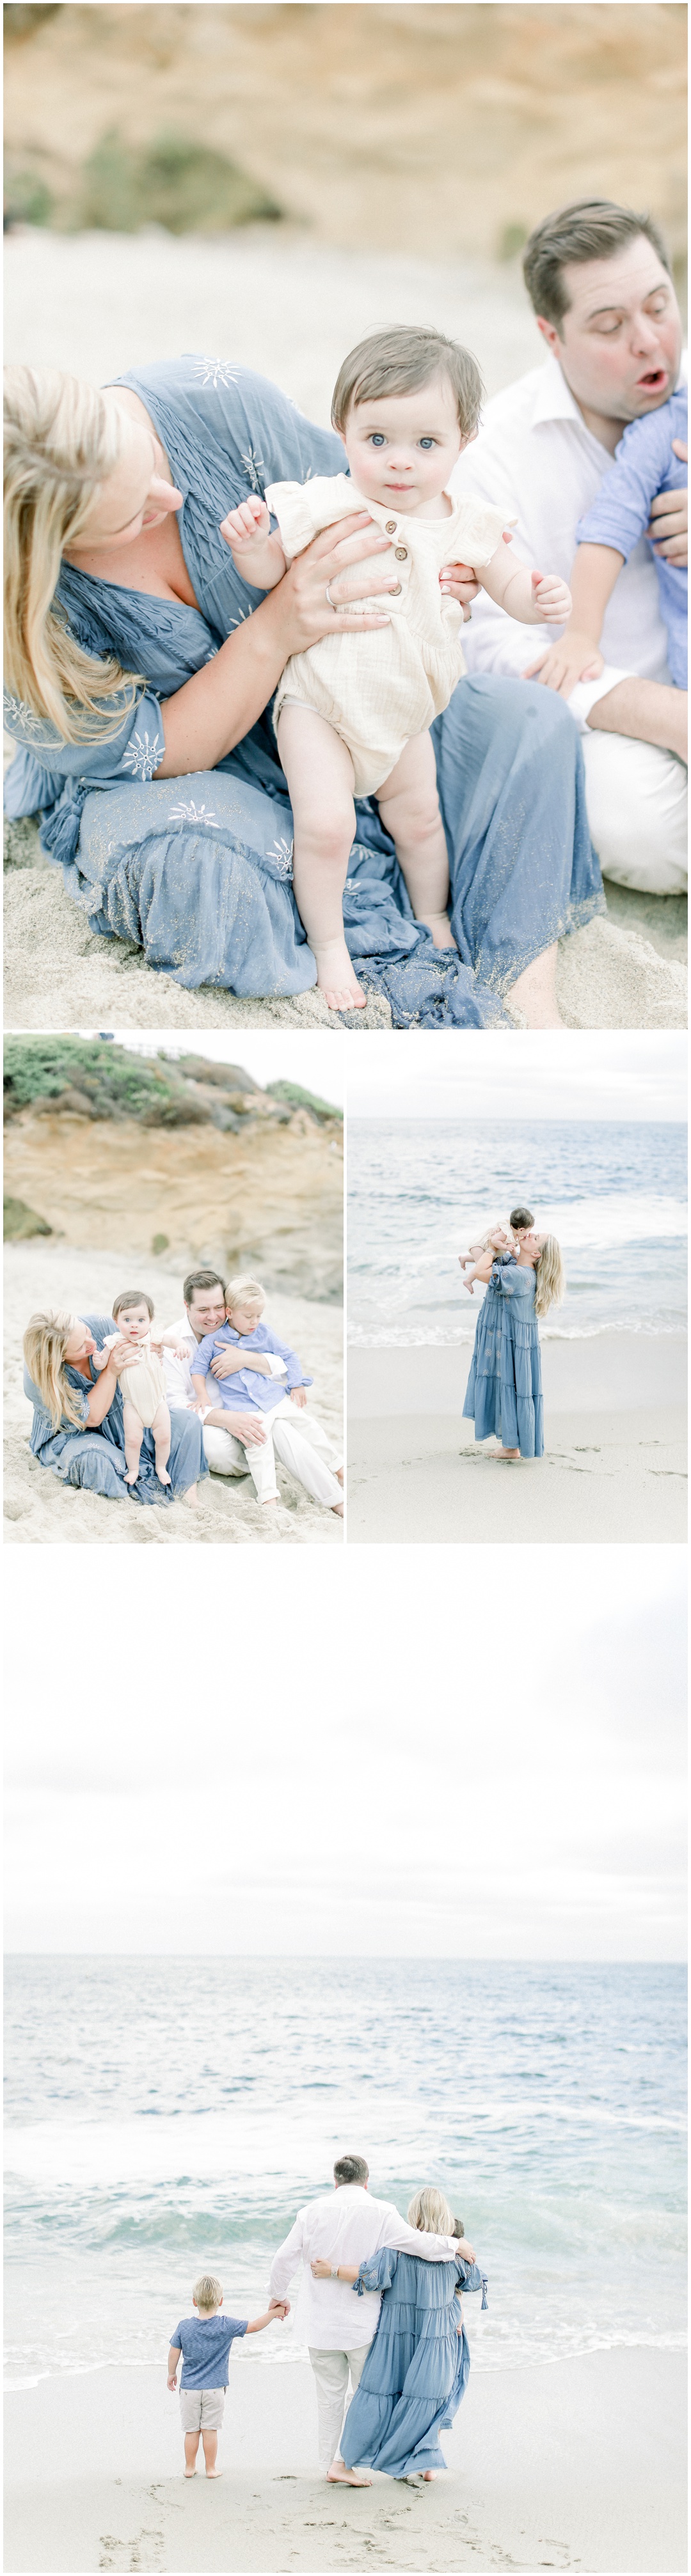 Newport+Beach+Newborn+Photographer+Orange+County+Family+Photographer+Cori+Kleckner+Photography+The+McClure+Family+Gracie+McClure_4385.jpg